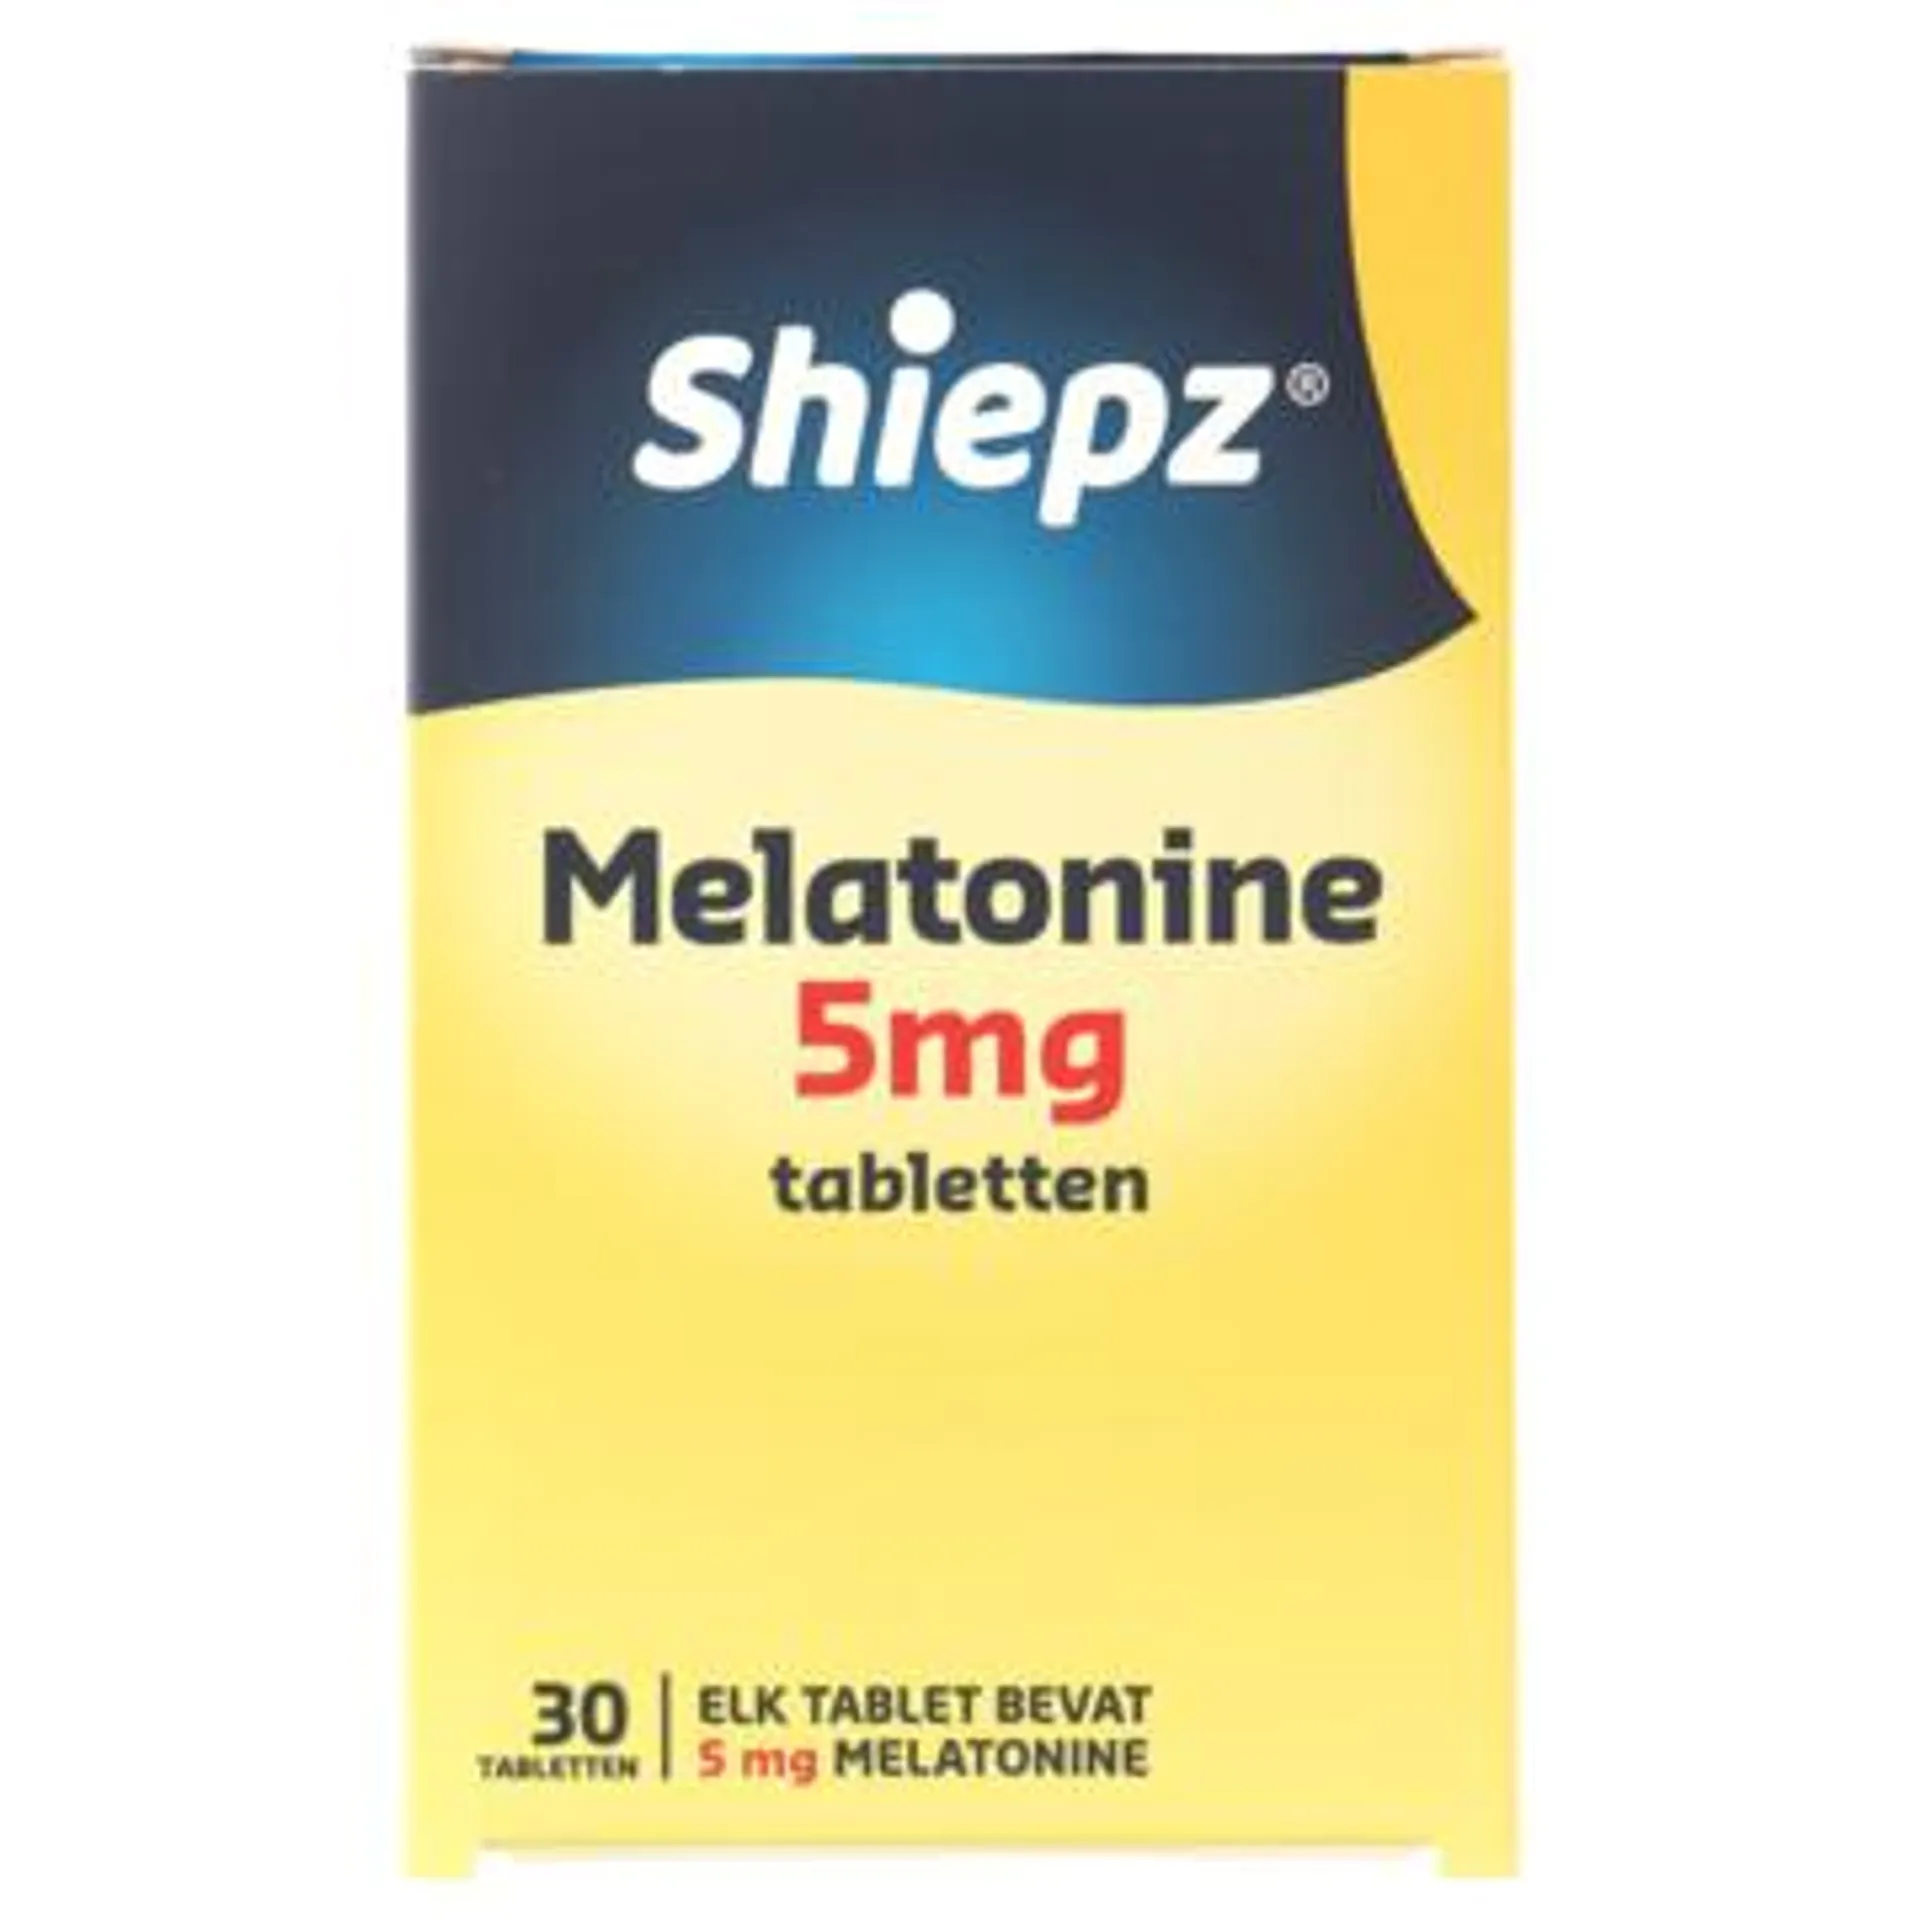 Sleepzz Shiepz Melatonine (5 mg tabletten), 30 stuks